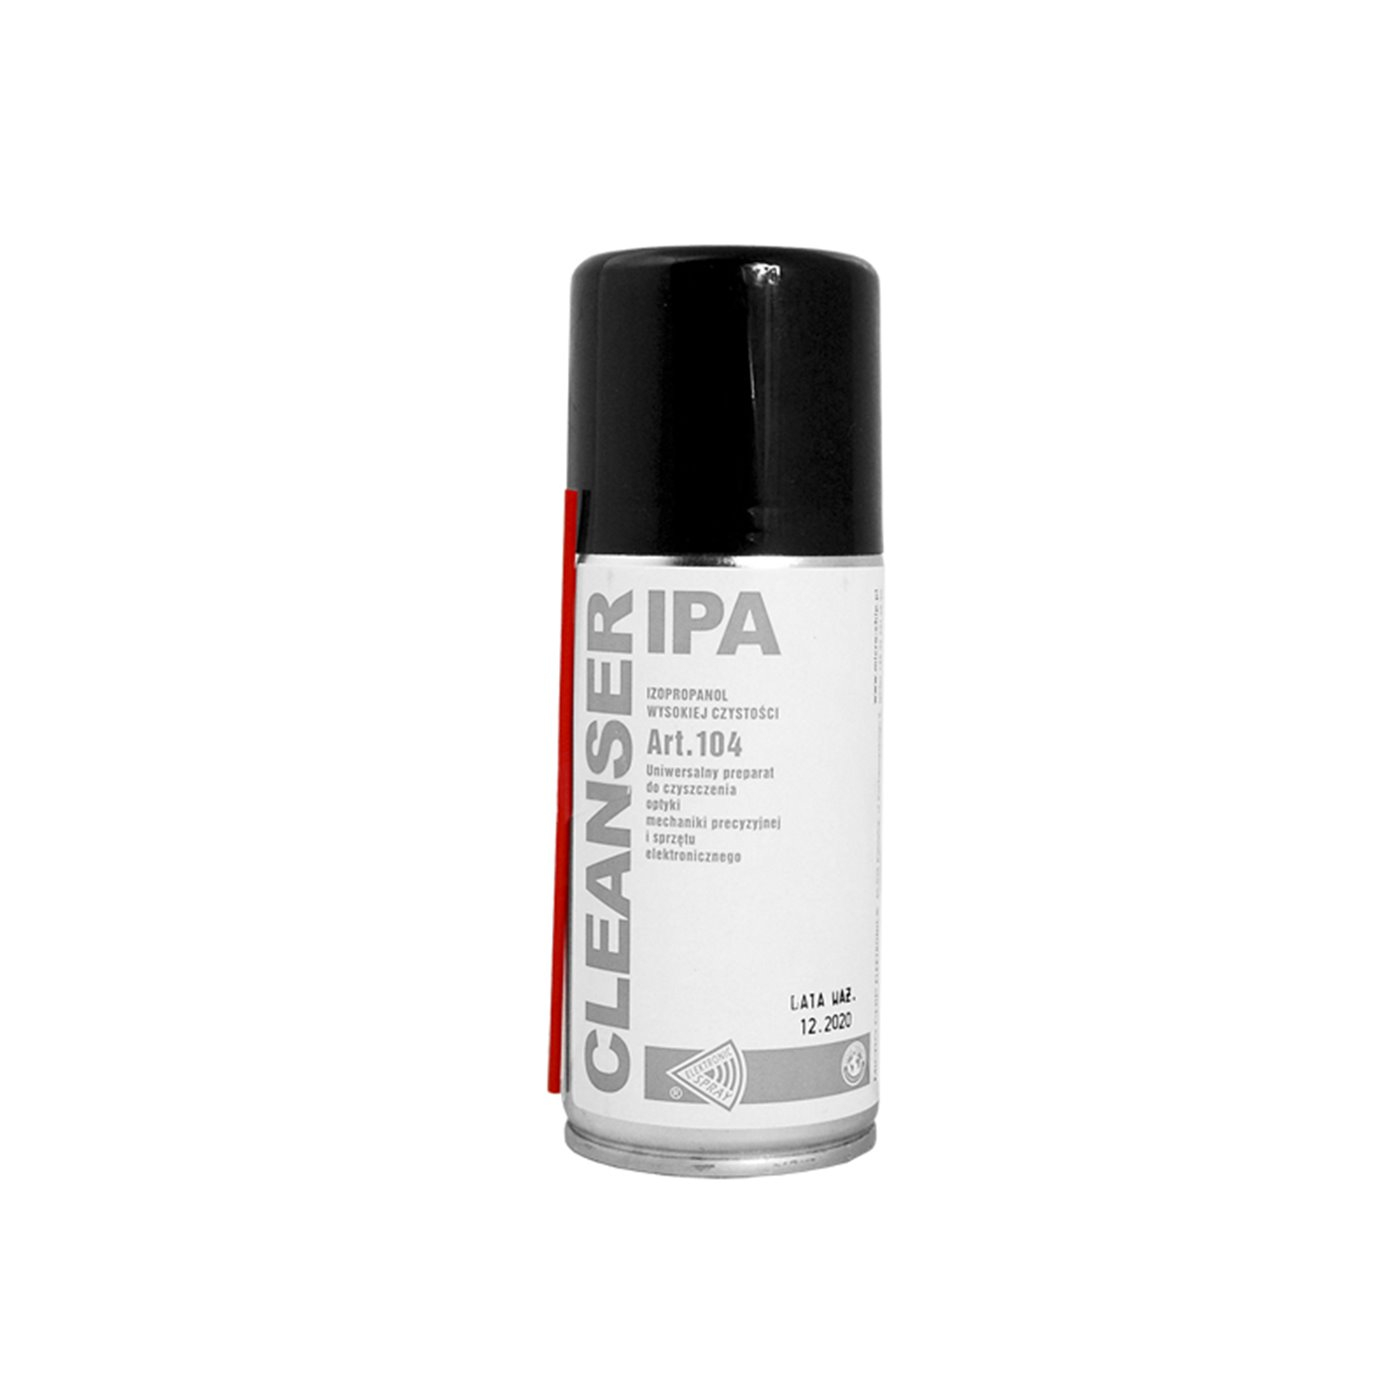 IPA Reinigungsspray - 150ml MICROCHIP